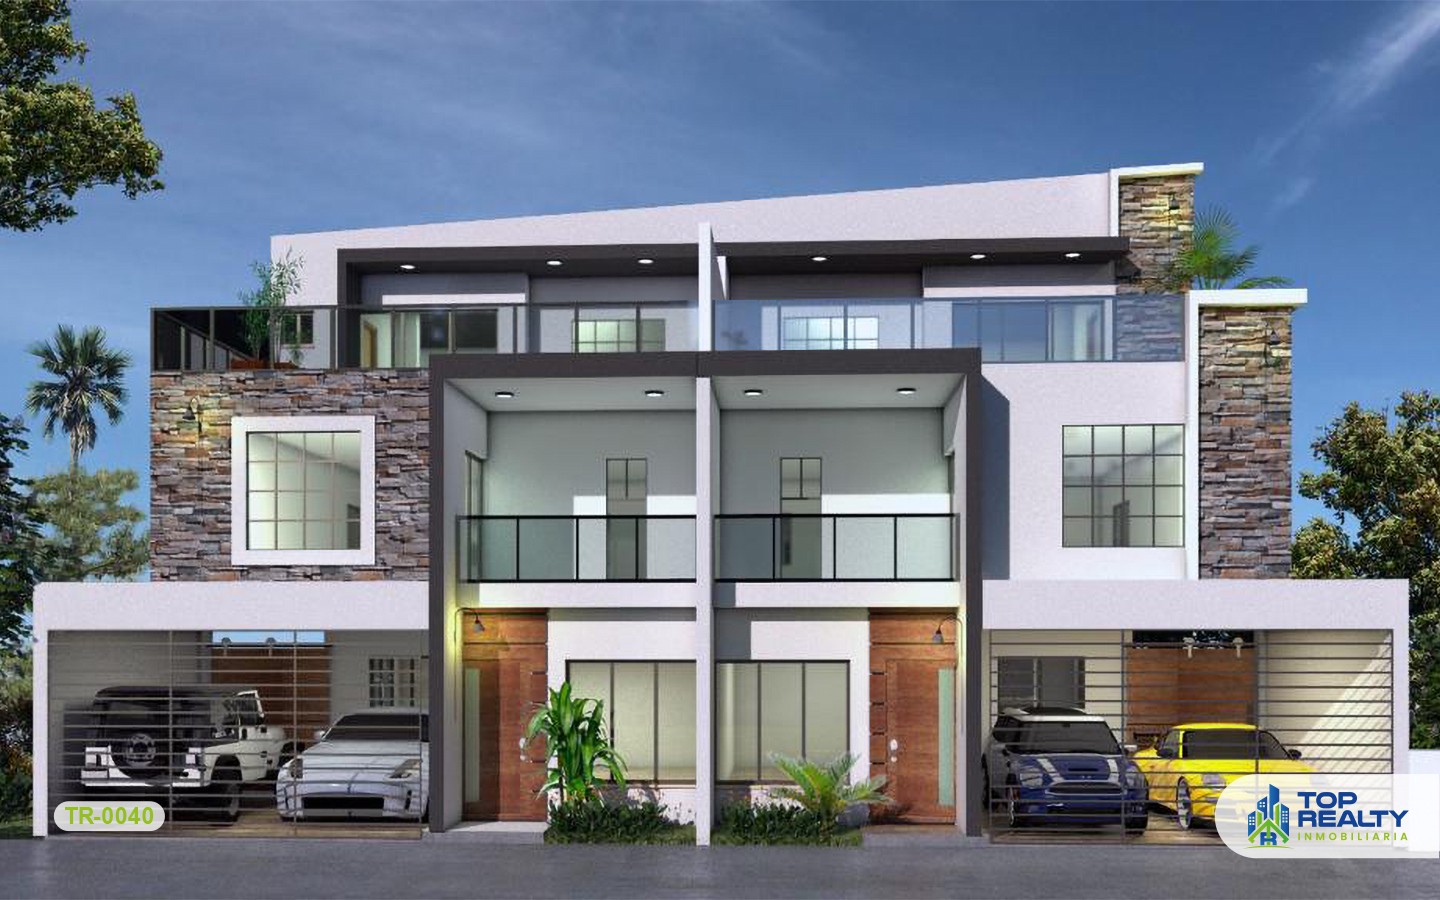 apartamentos - TR-0040: ¡Proyecto único! Casas en tres niveles con distribución excelente.